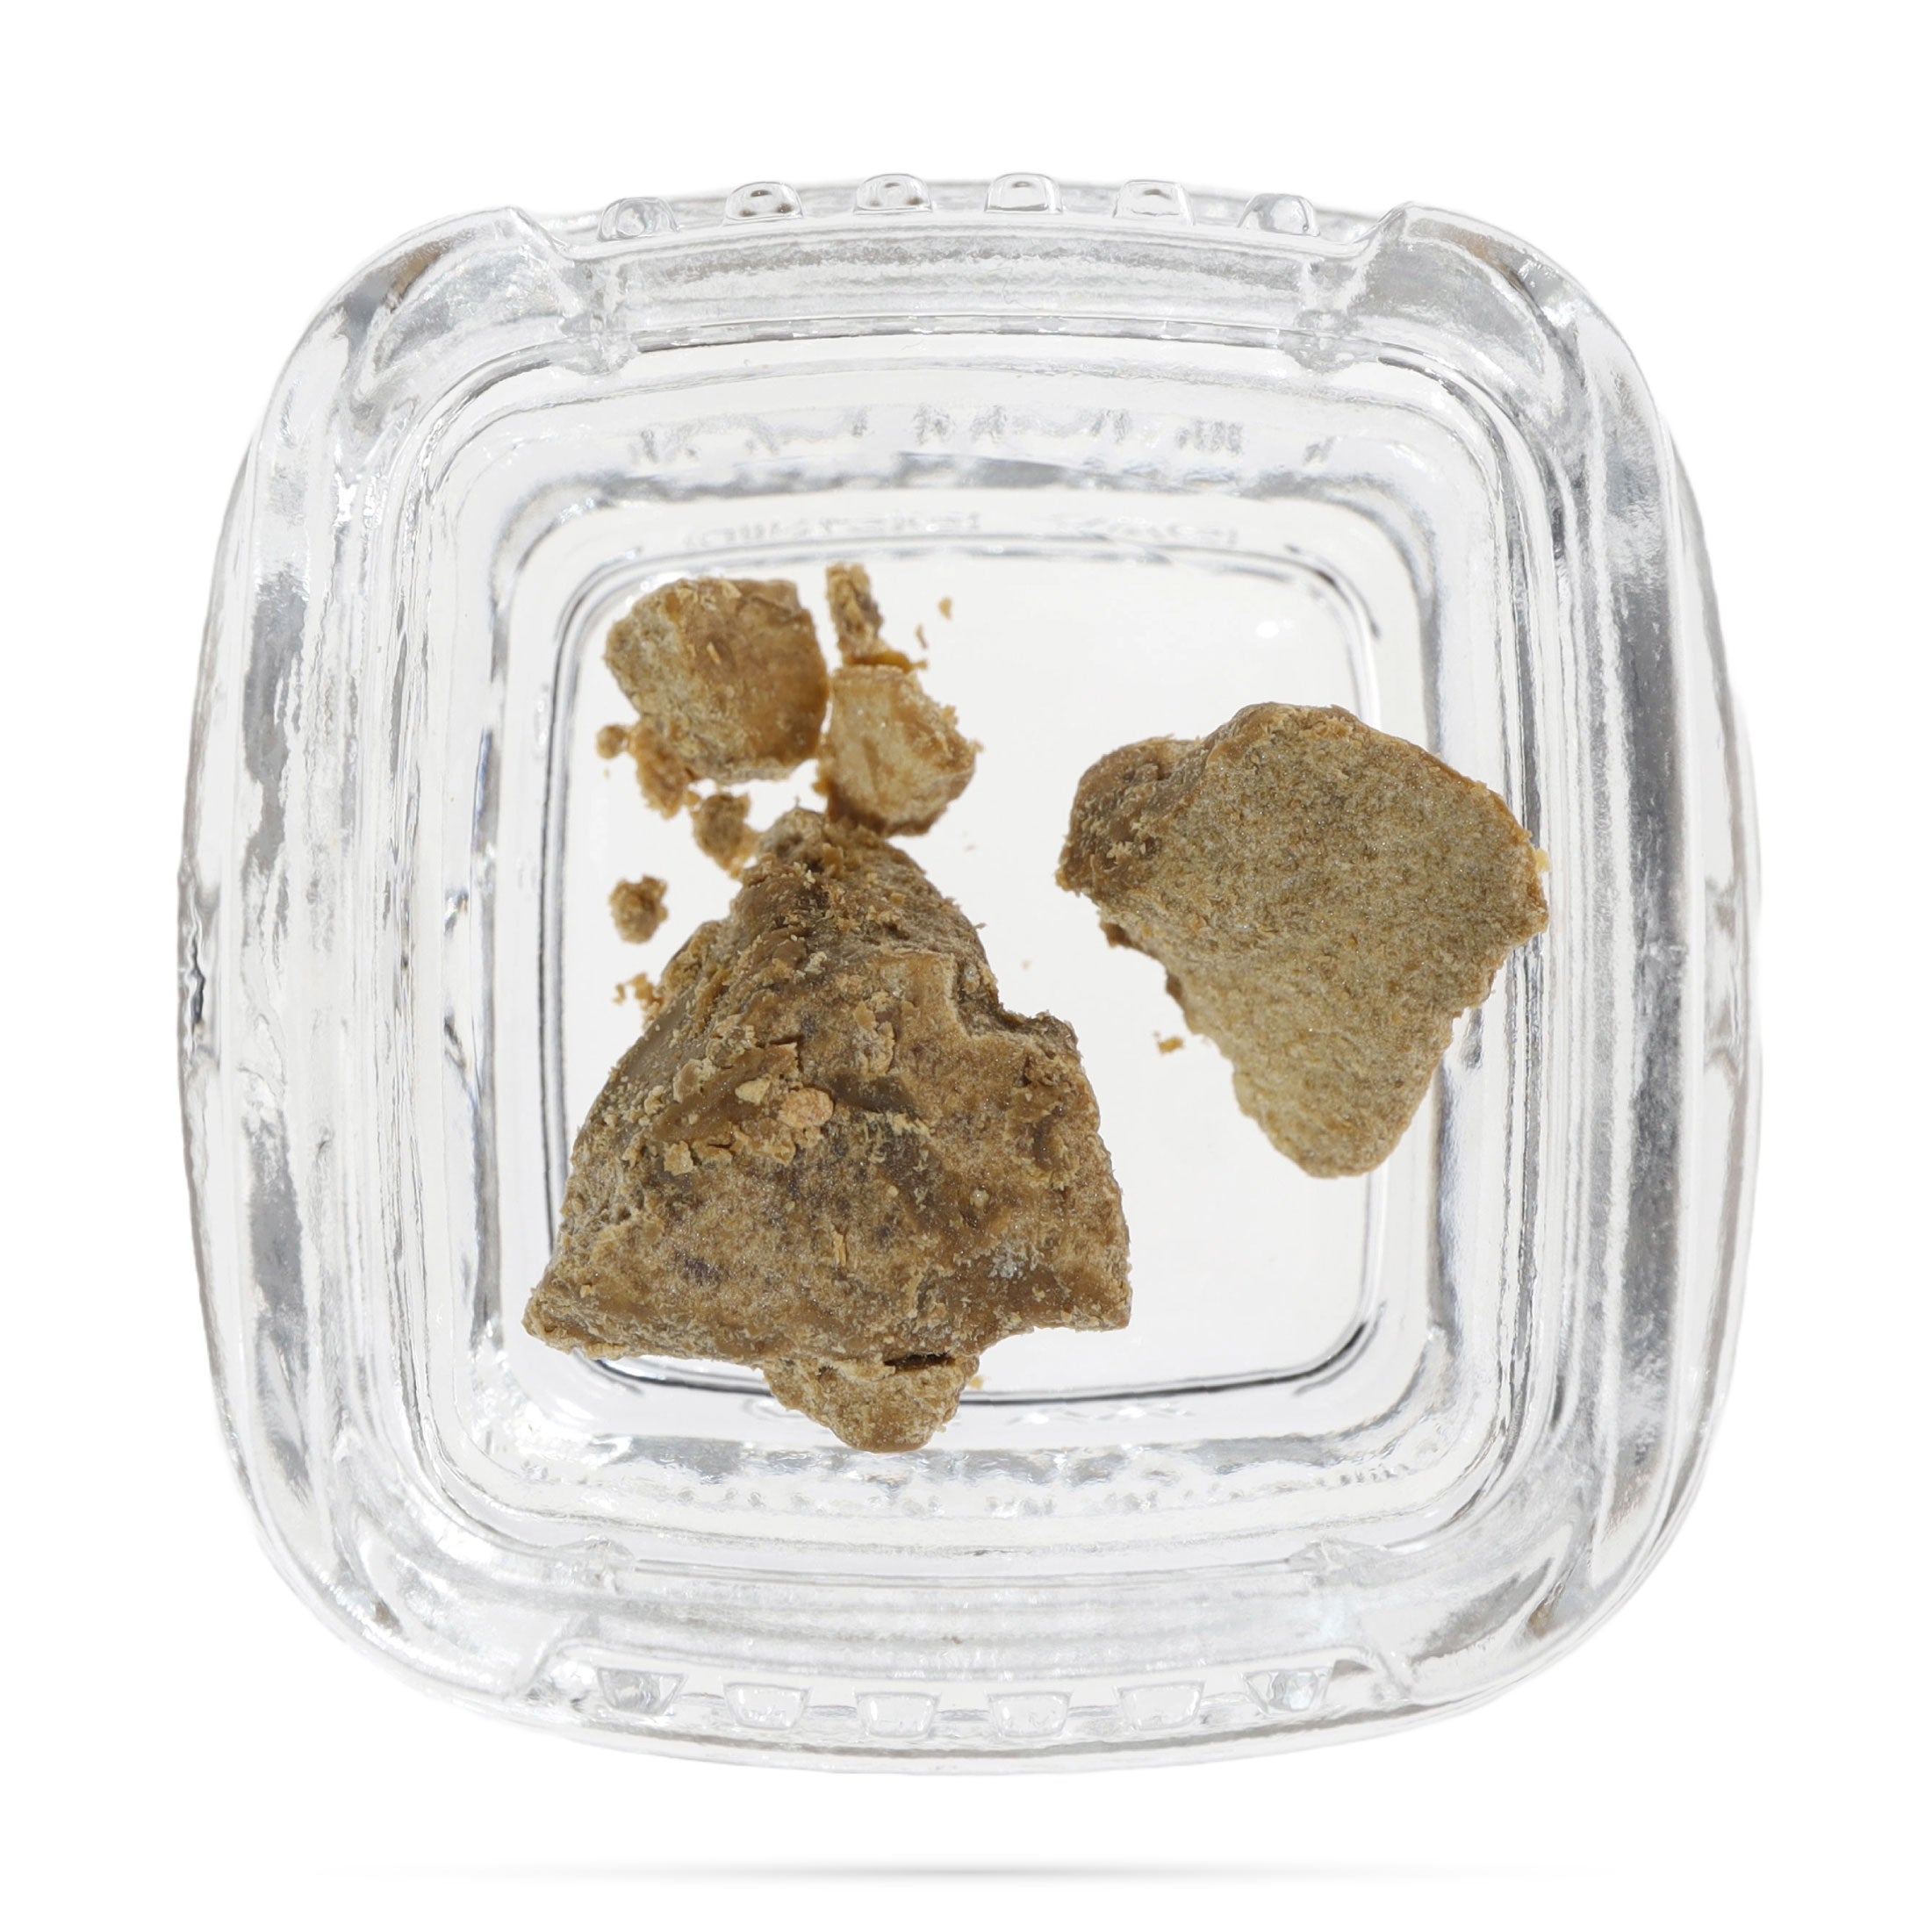 Image of a Calyx jar containing 1 gram of CBGa crumble.